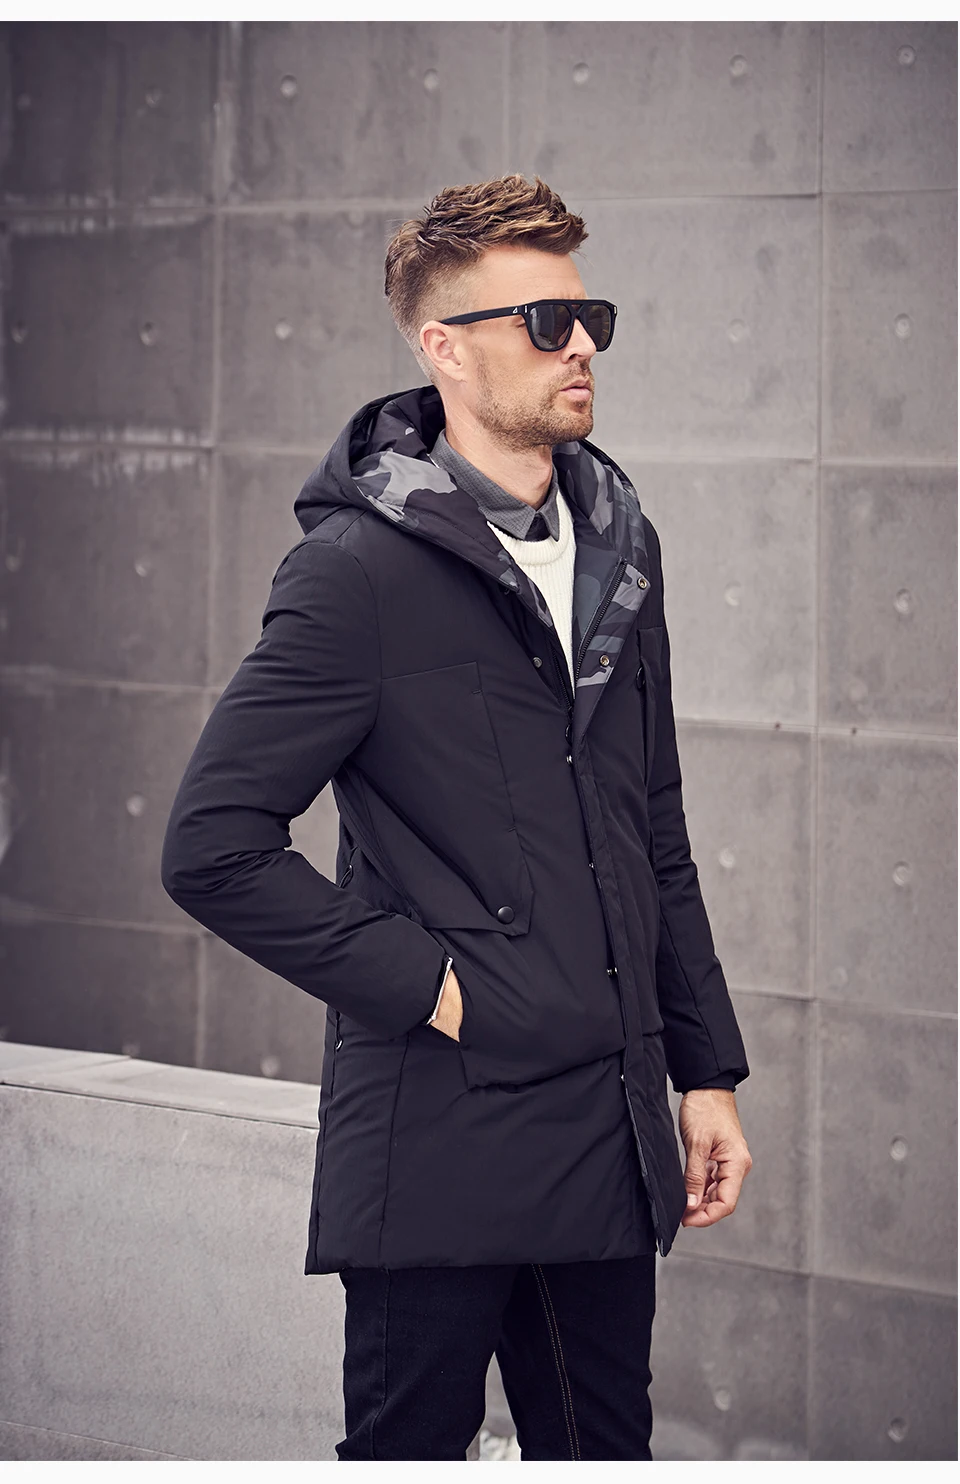 Бренд Enjeolon, утолщенная зимняя камуфляжная куртка с капюшоном, мужской светильник, пуховое пальто для мужчин, худи, парка, пальто, 3XL, пуховая парка, YR2702